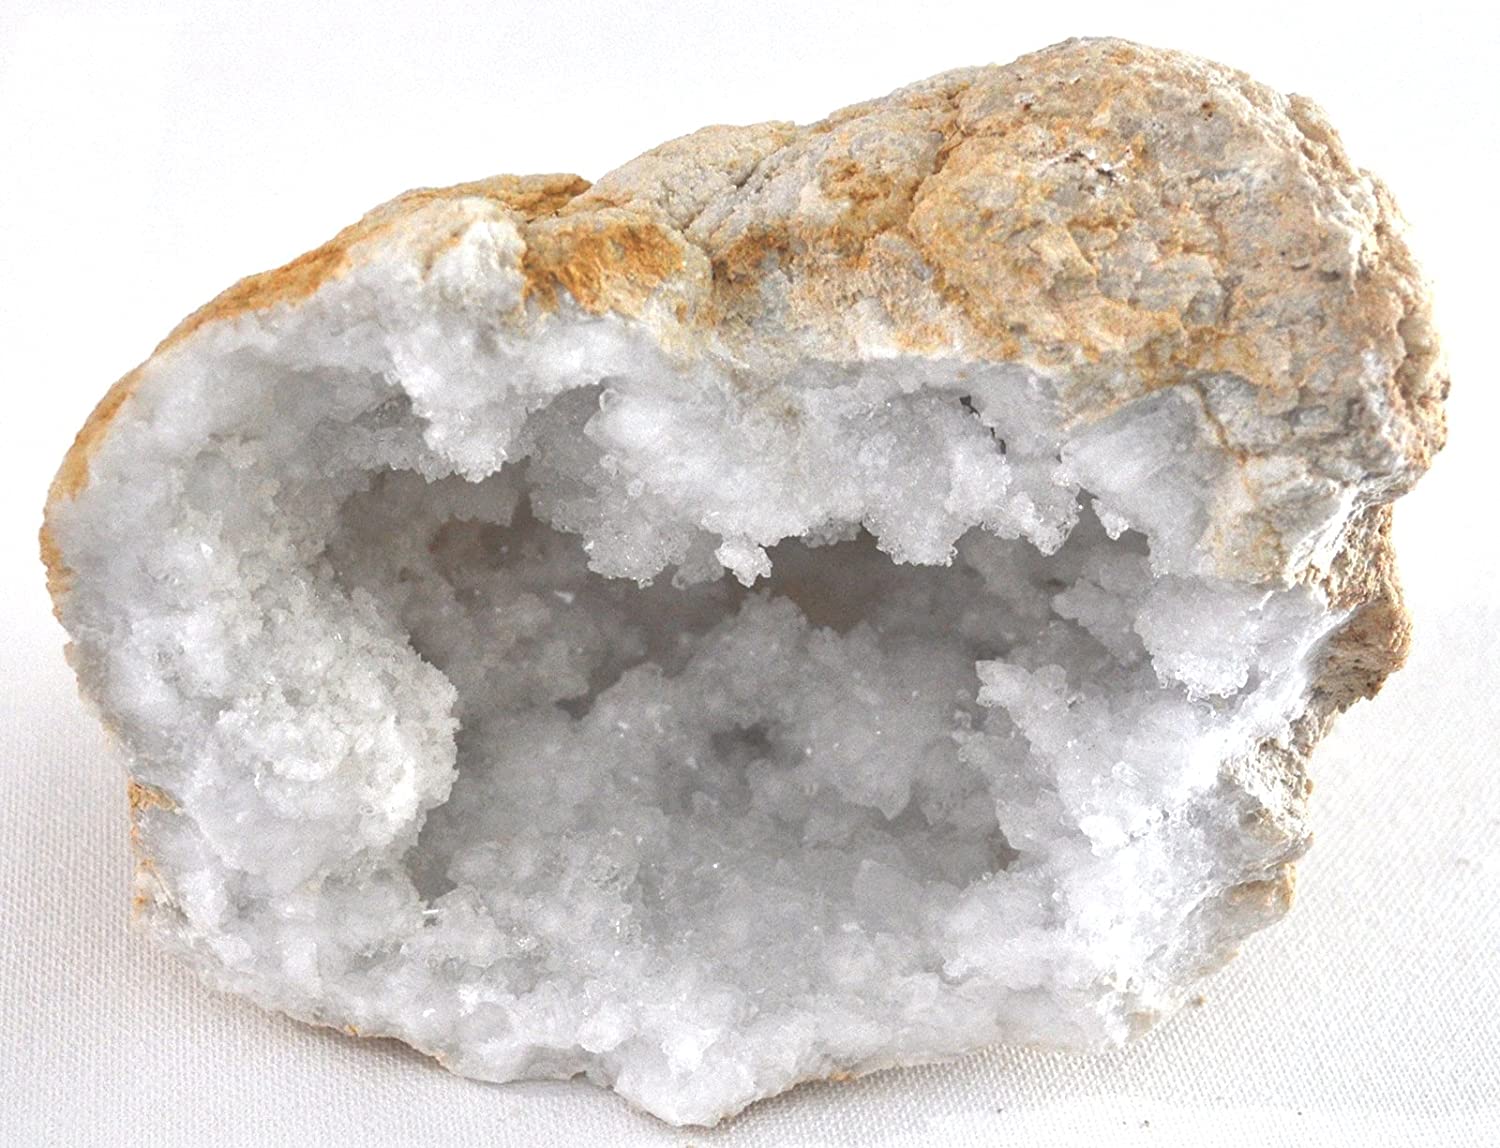 Crack Your Own Druzy Quartz Geode